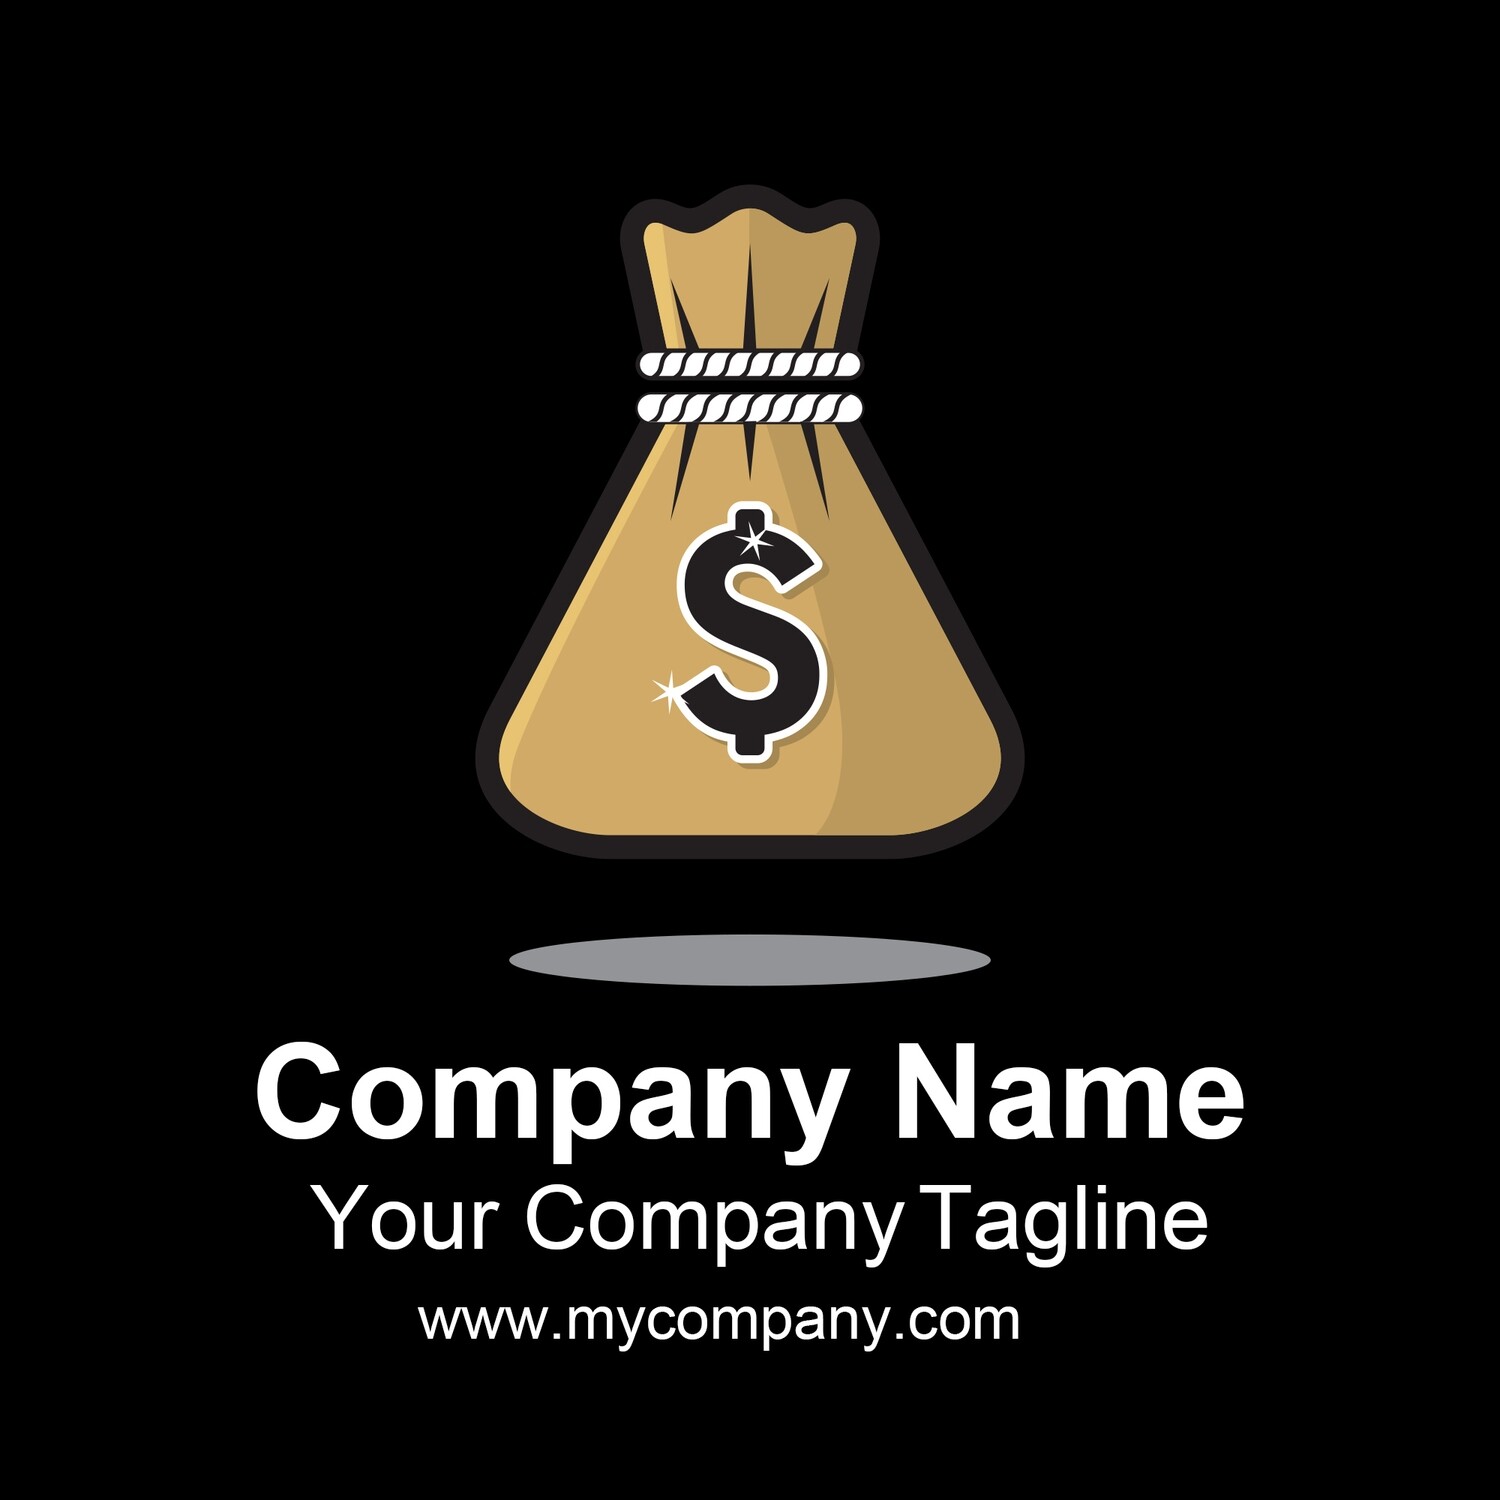 #10 Free Money Bag Logo Design - April 2022